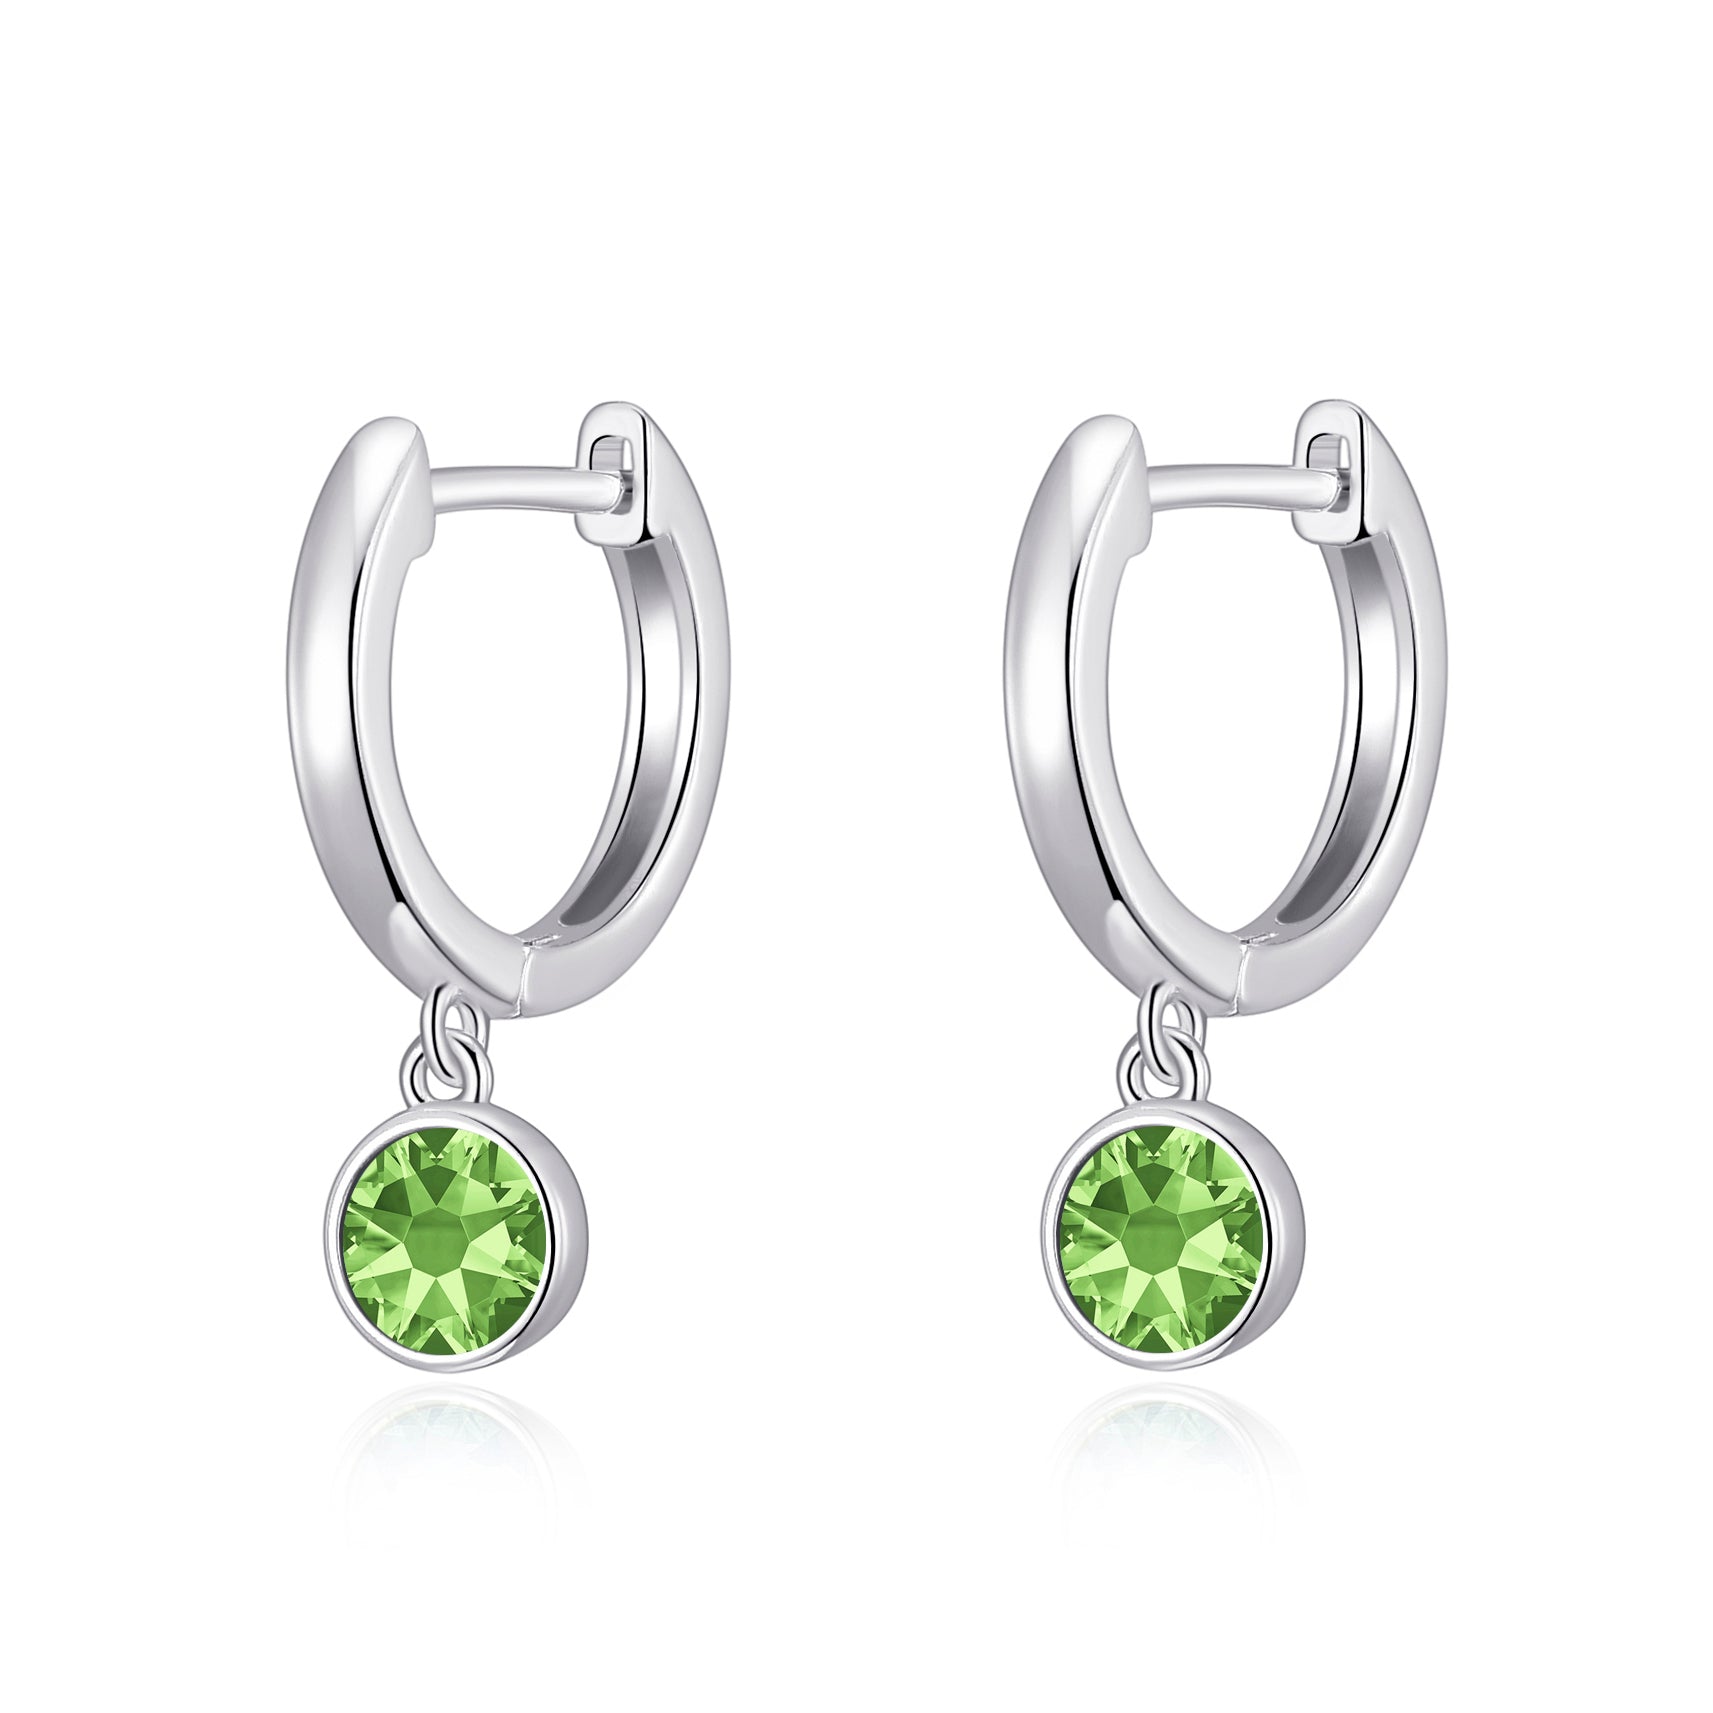 Light Green Crystal Hoop Earrings Created with Zircondia® Crystals by Philip Jones Jewellery